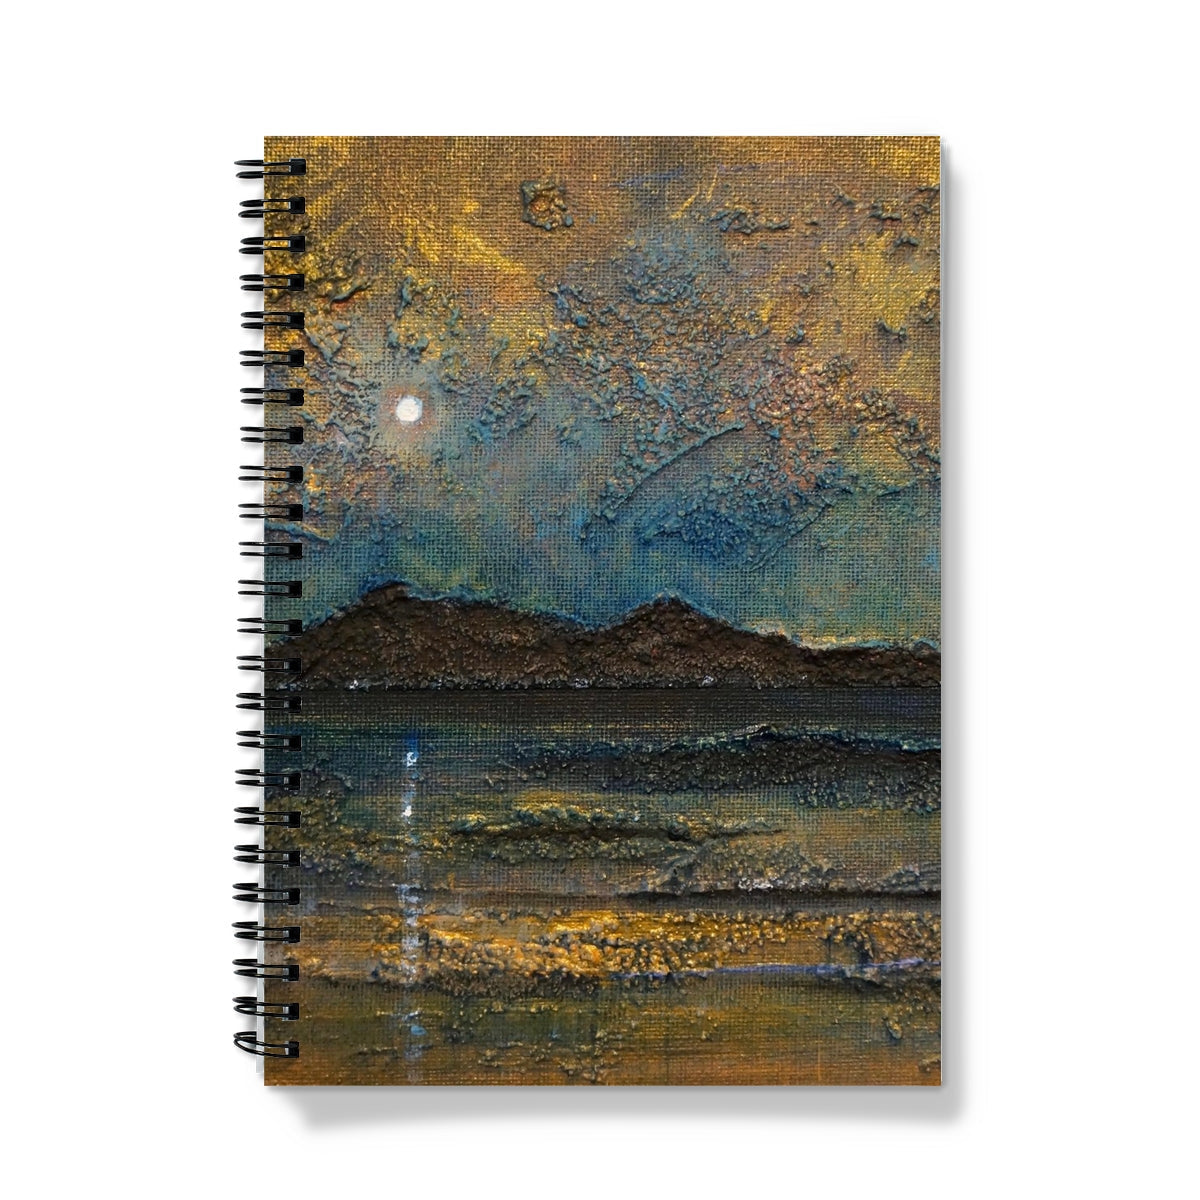 Arran Moonlight Art Gifts Notebook-Journals & Notebooks-Arran Art Gallery-A5-Lined-Paintings, Prints, Homeware, Art Gifts From Scotland By Scottish Artist Kevin Hunter